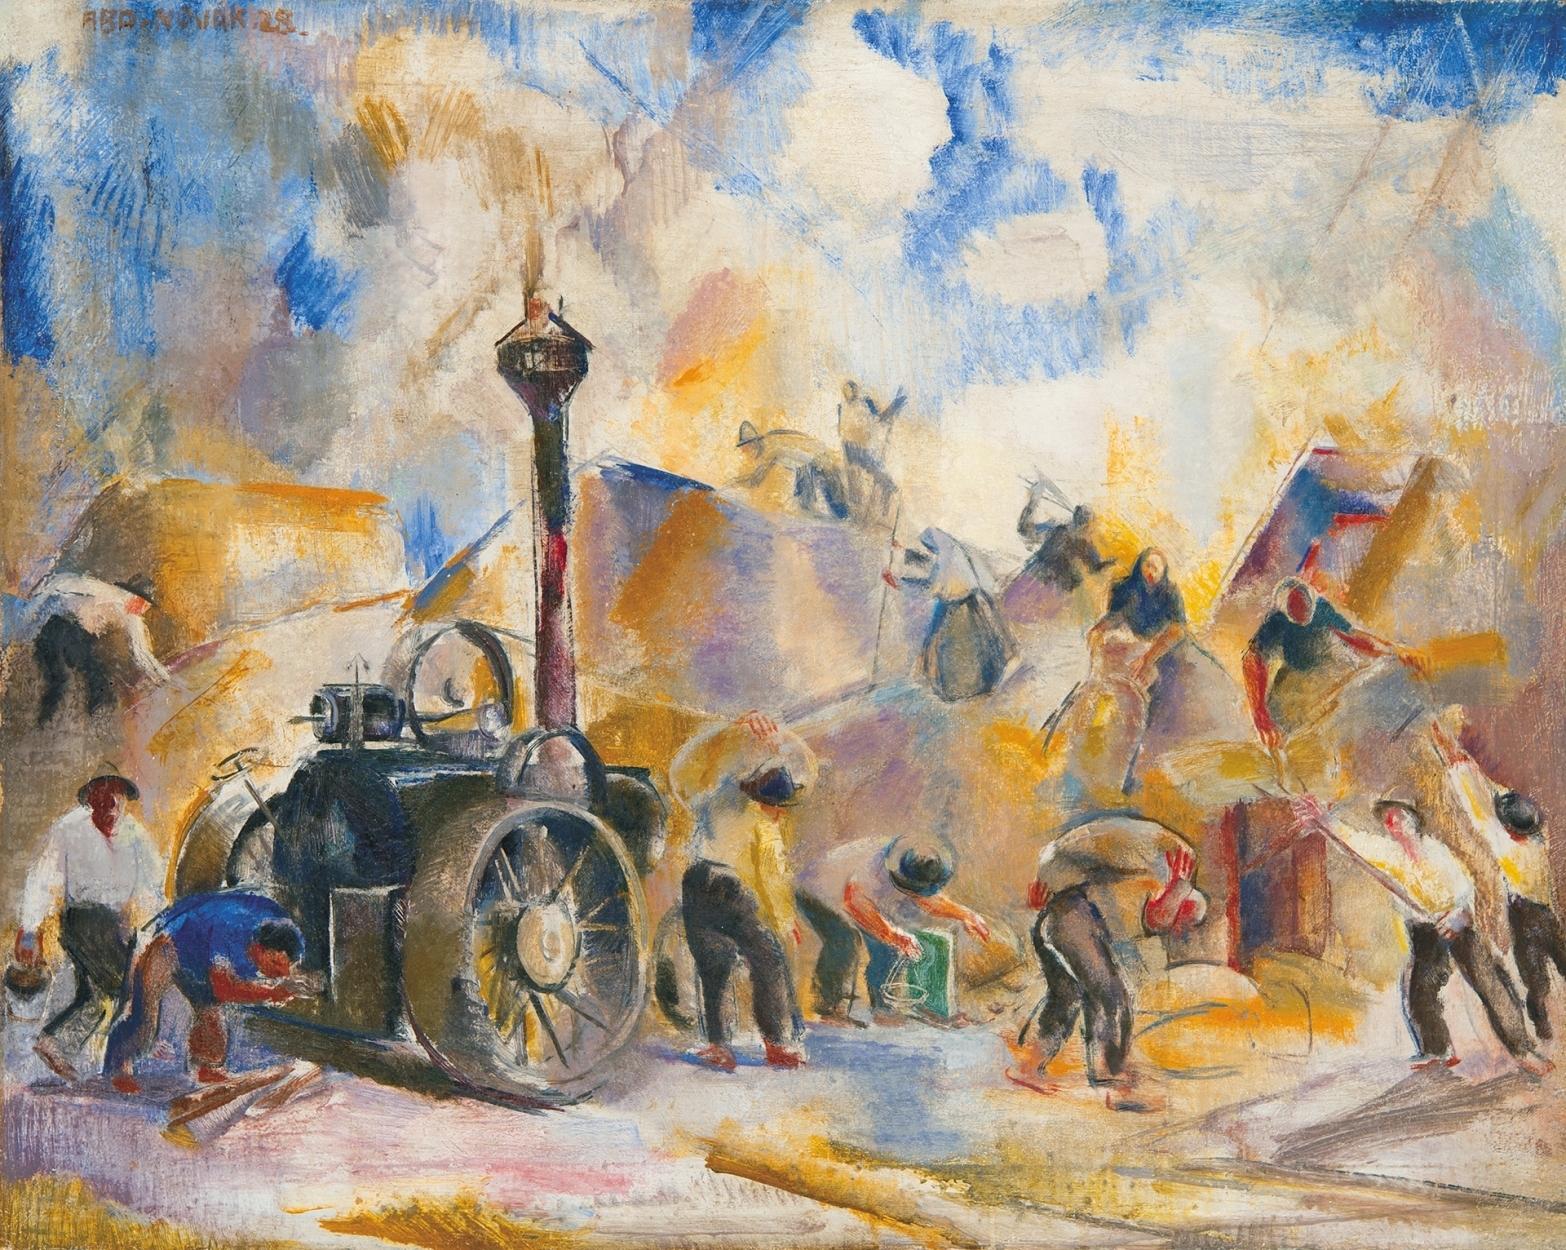 August mood (Threshing) by Vilmos Aba-Novák, 1928